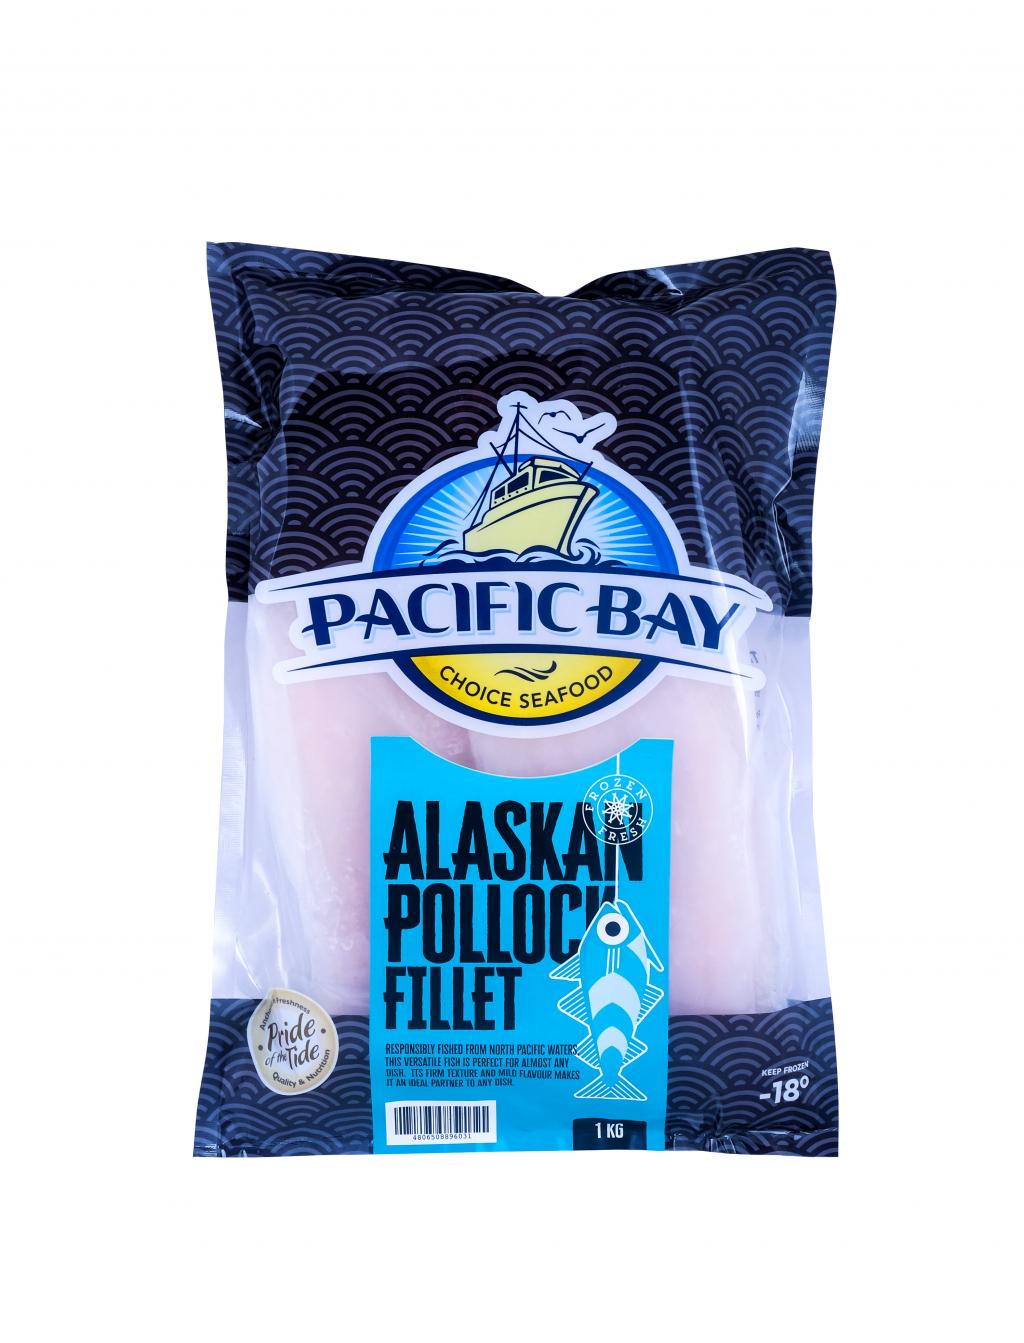 Alaskan Pollock Fillet